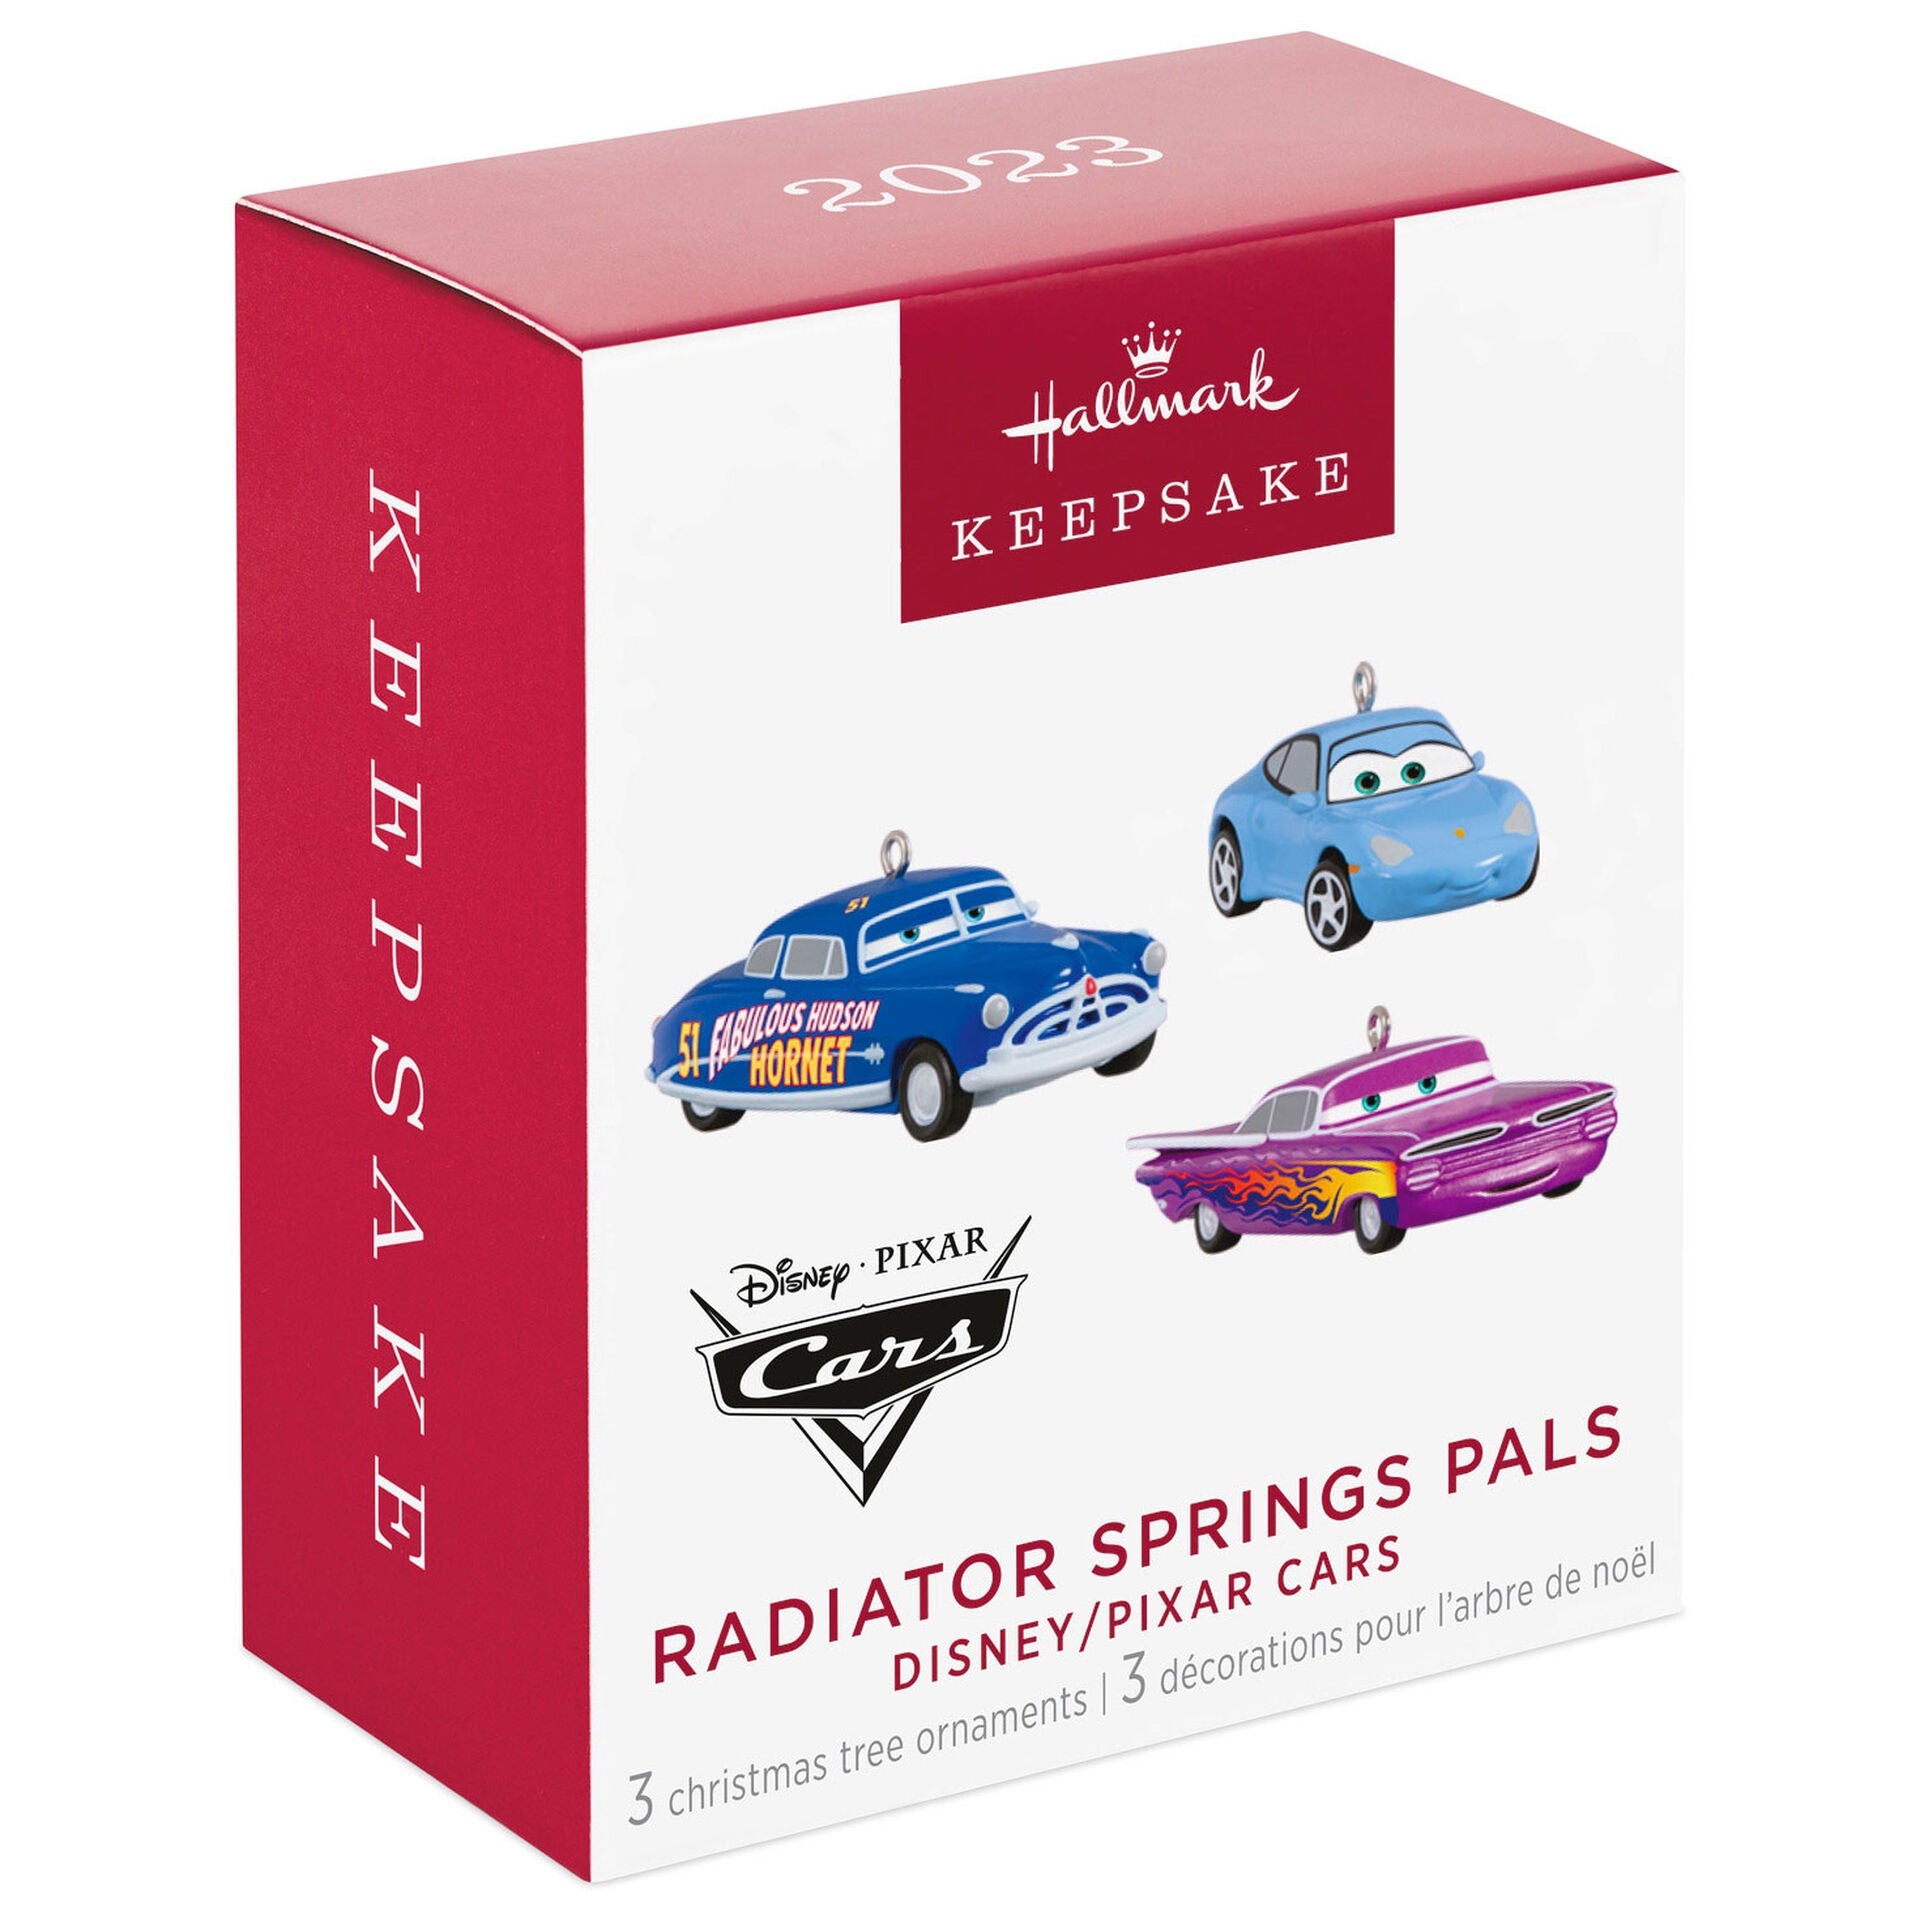 Mini Disney/Pixar Cars Radiator Springs Pals Ornaments, Set of 3